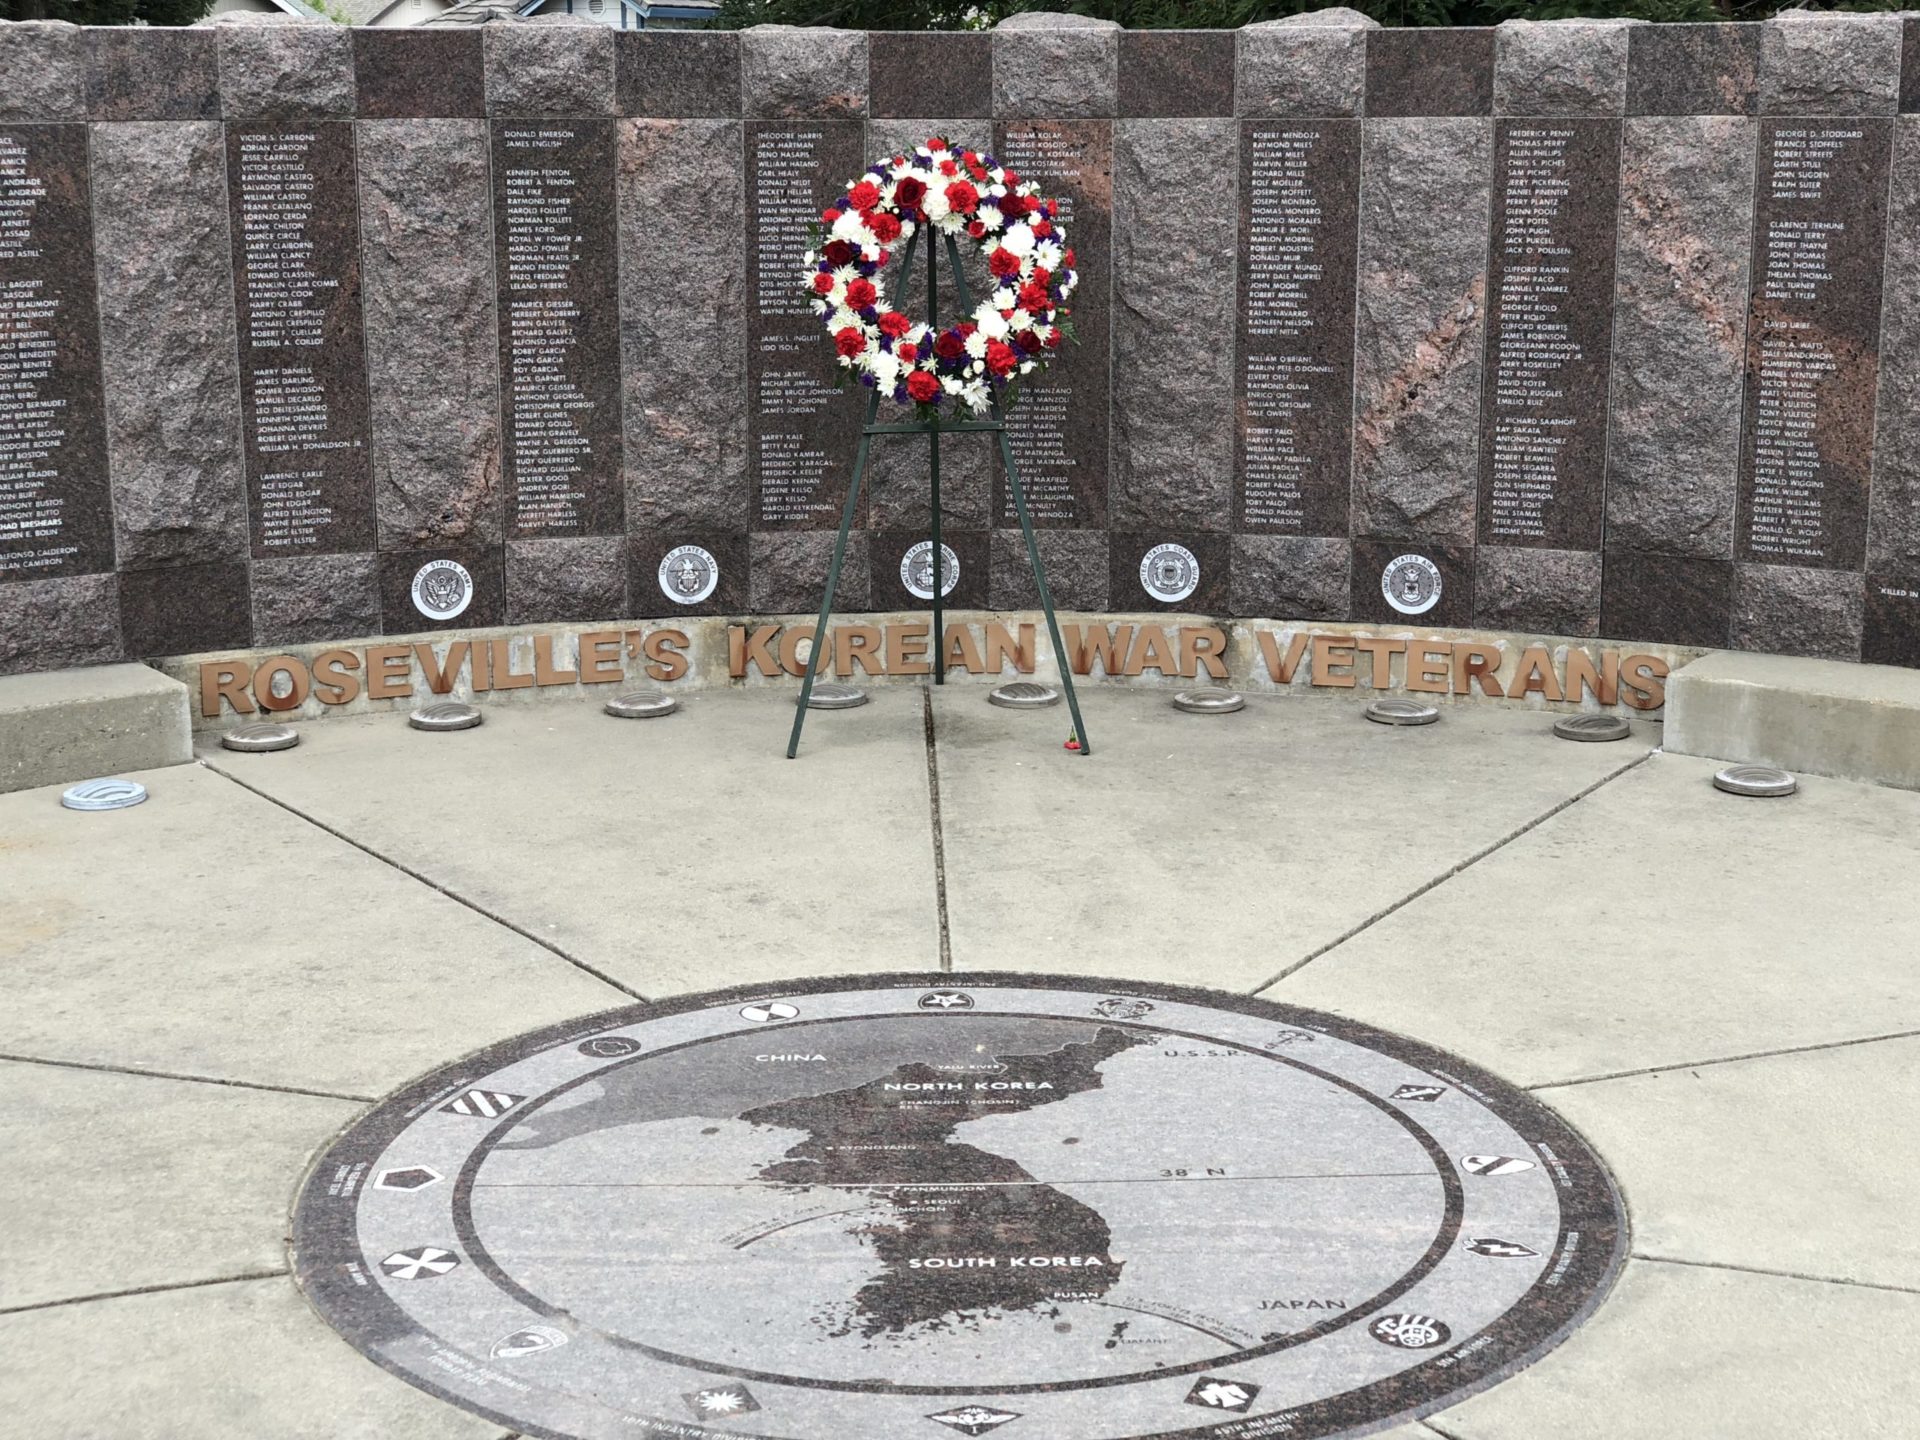 Korean War Memorials - Roseville